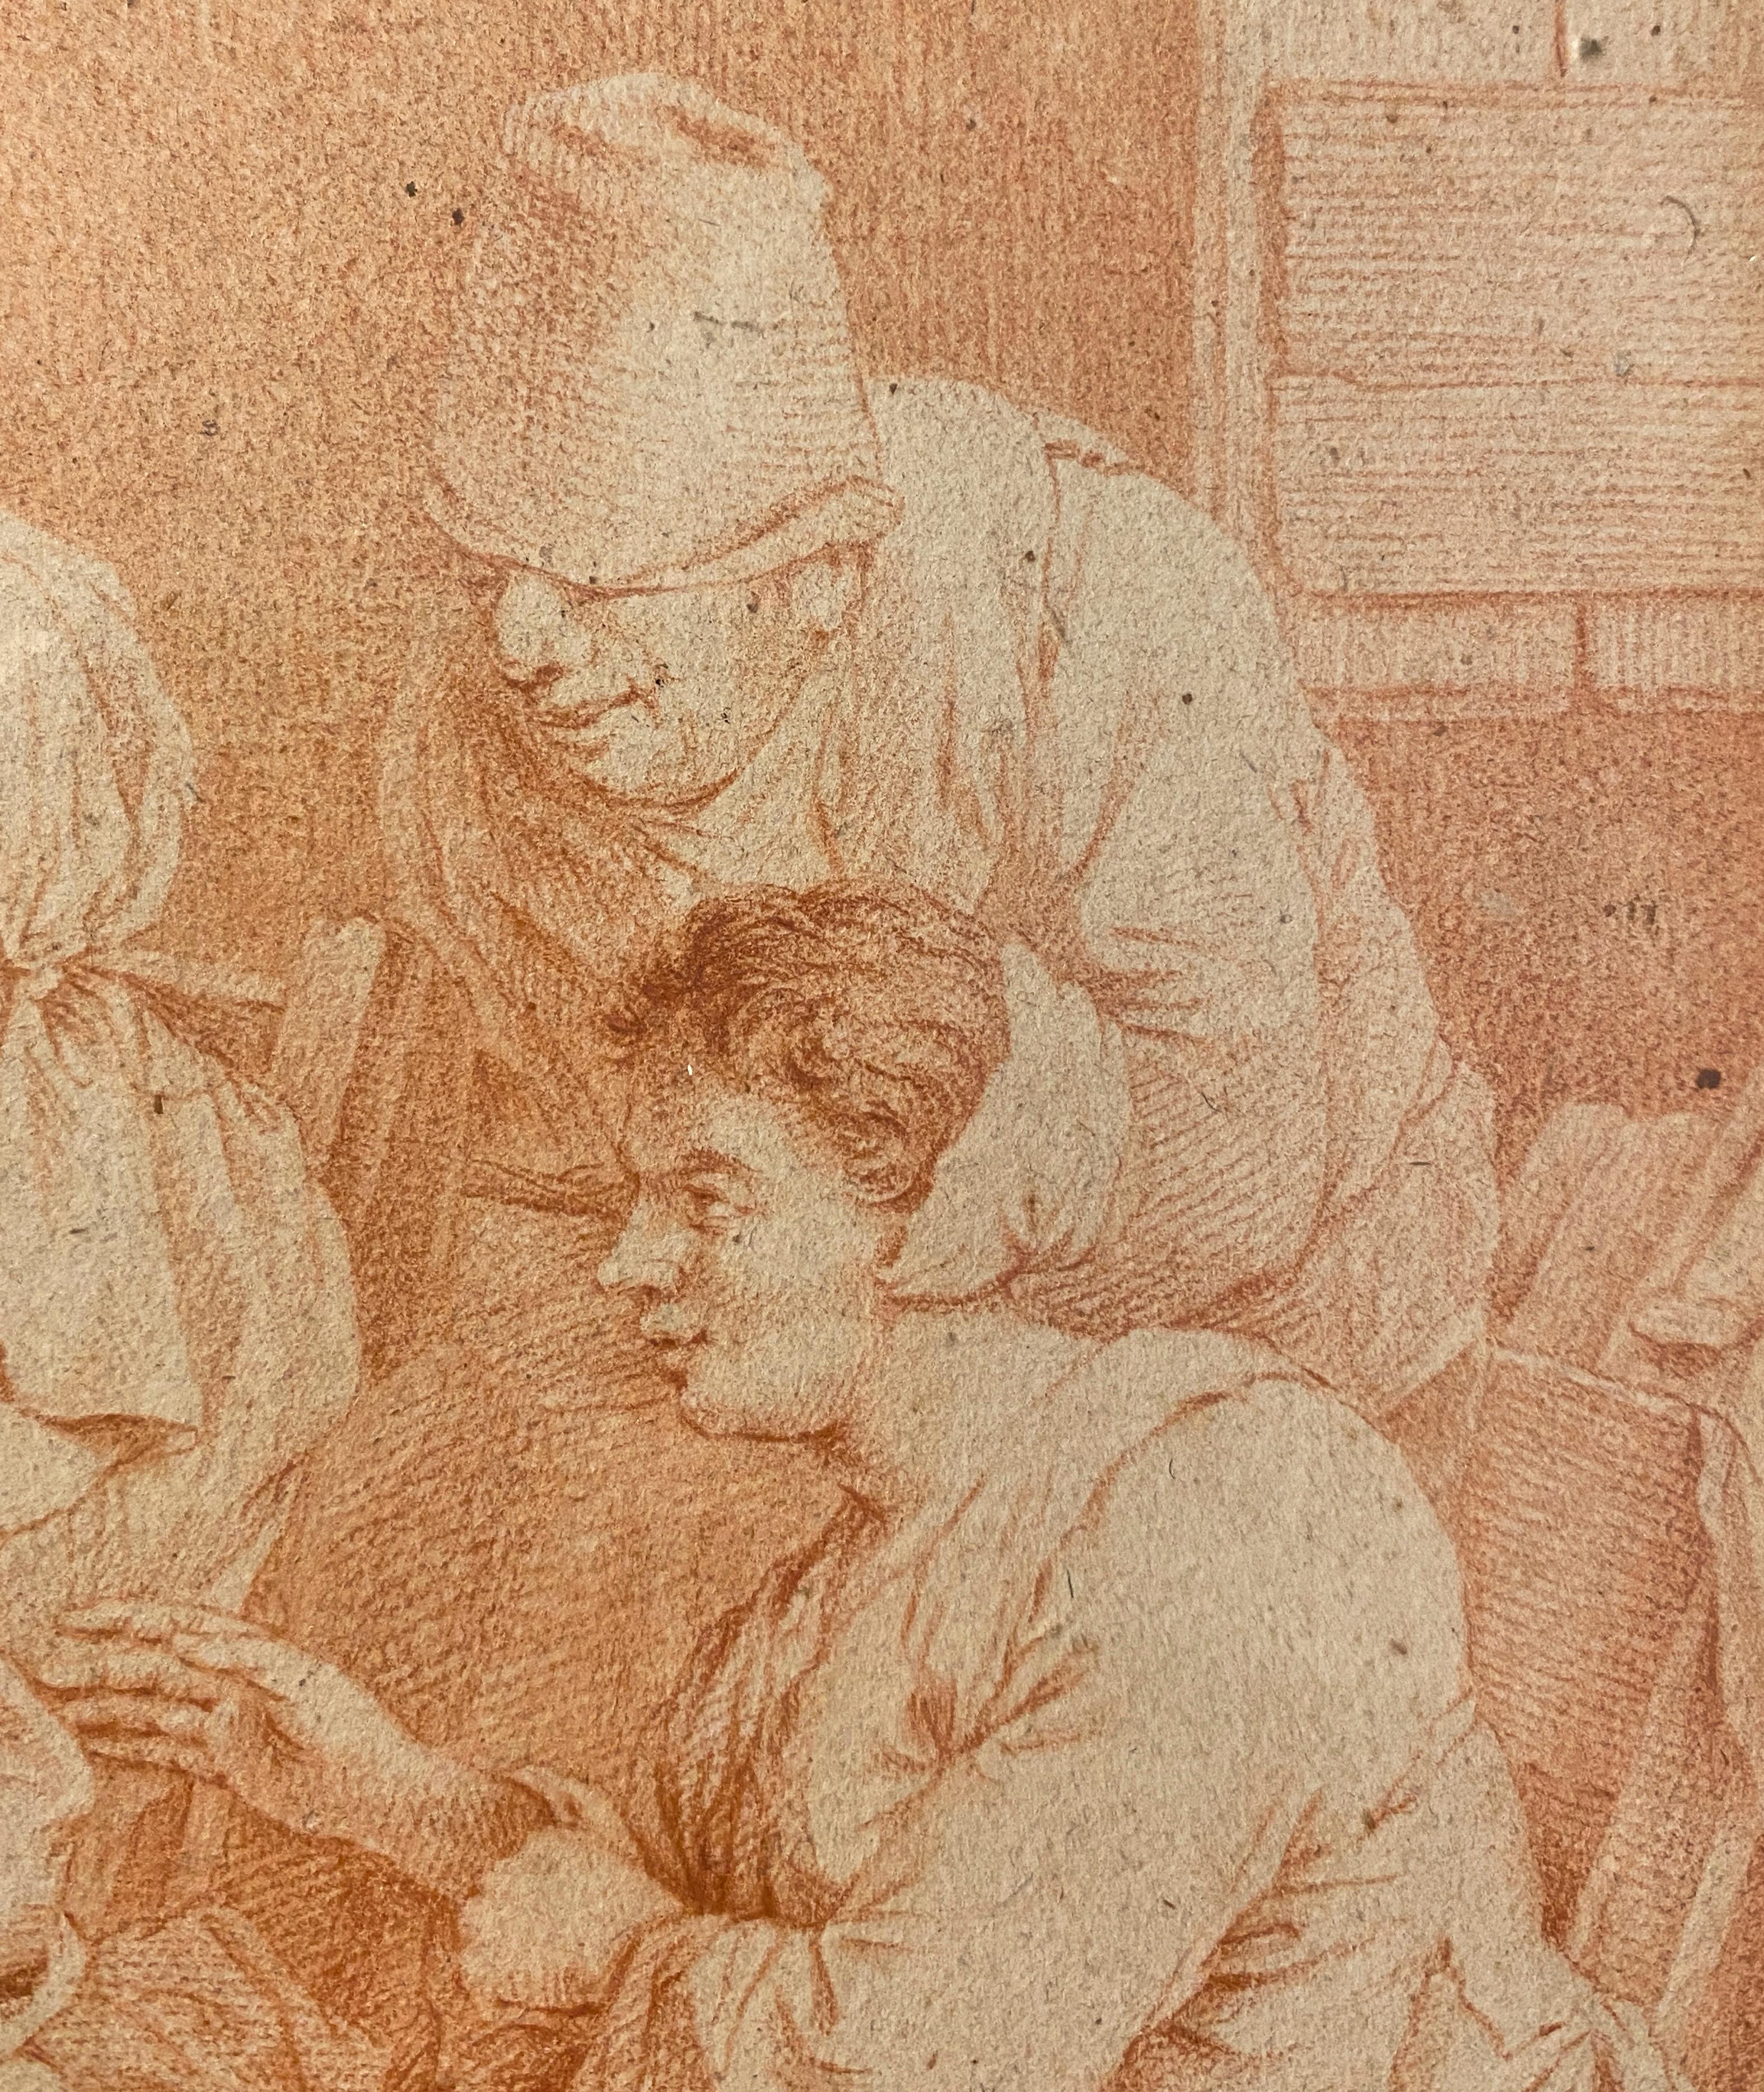 Peasant Family, Cornelis Bega. Dutch Golden age painter and engraver. 1